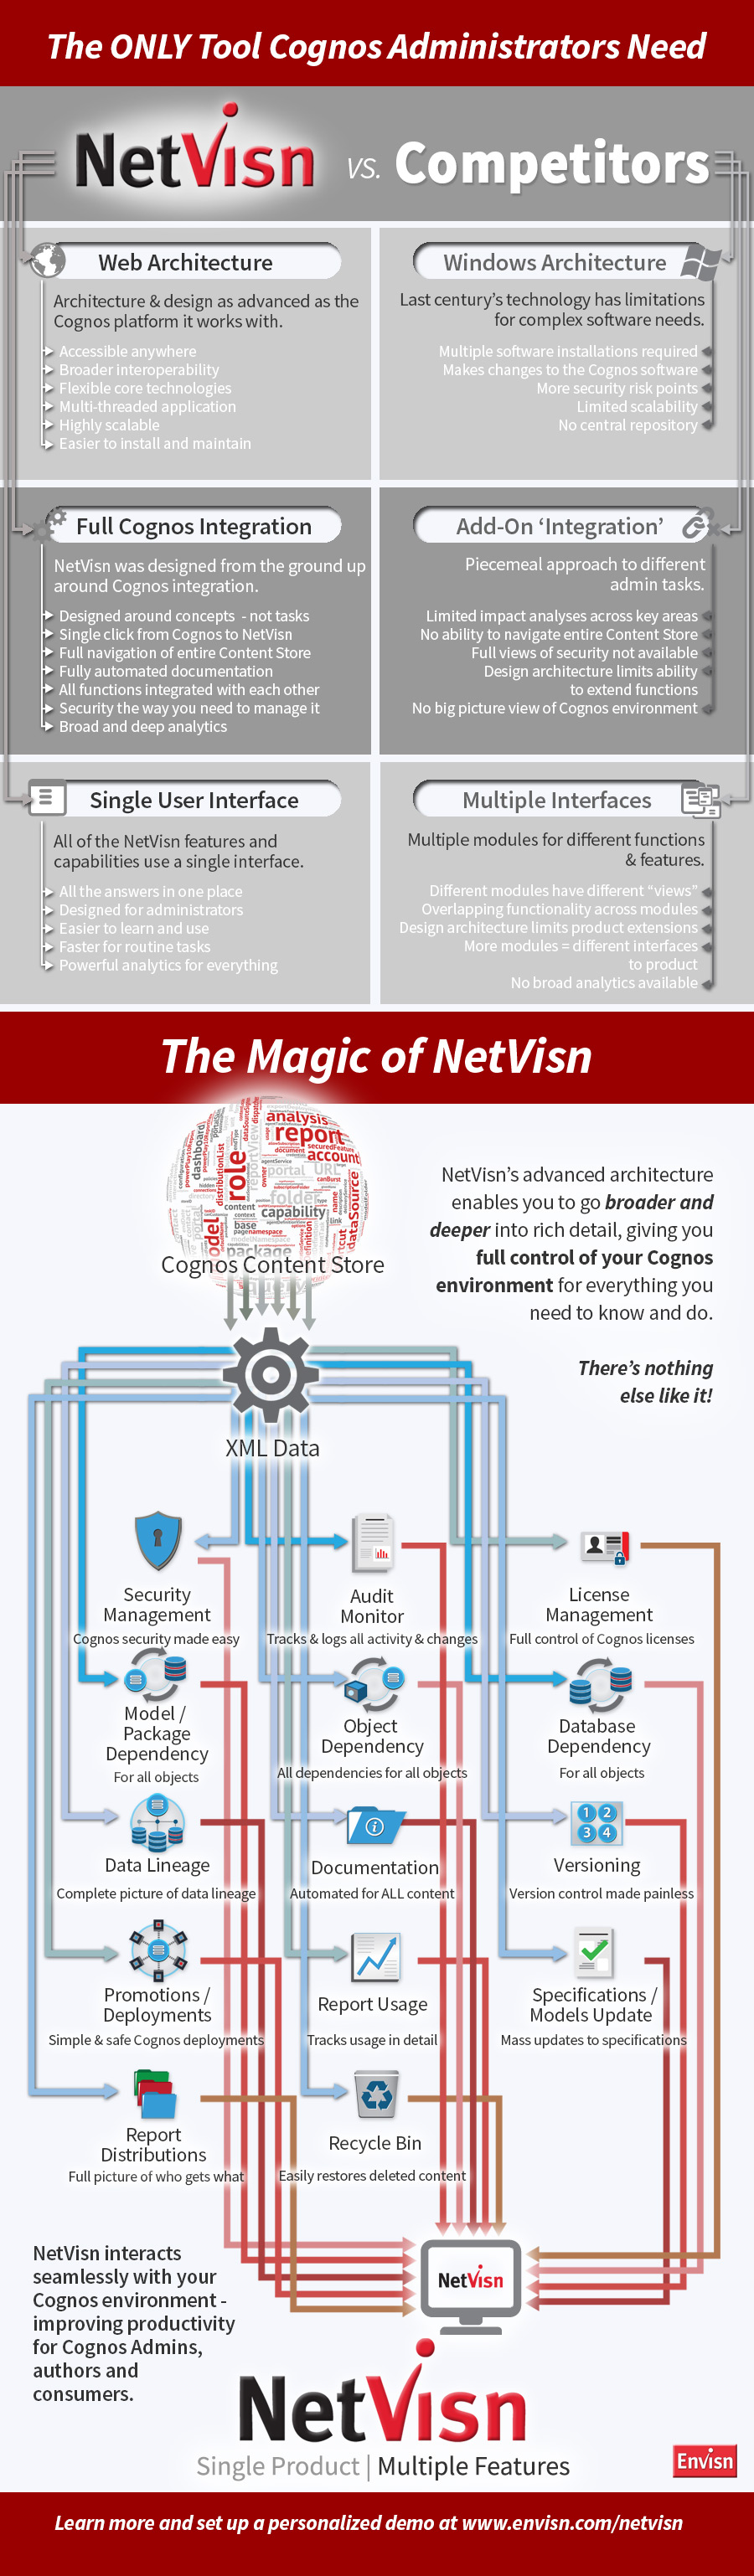 Netvisn vs other cognos tools